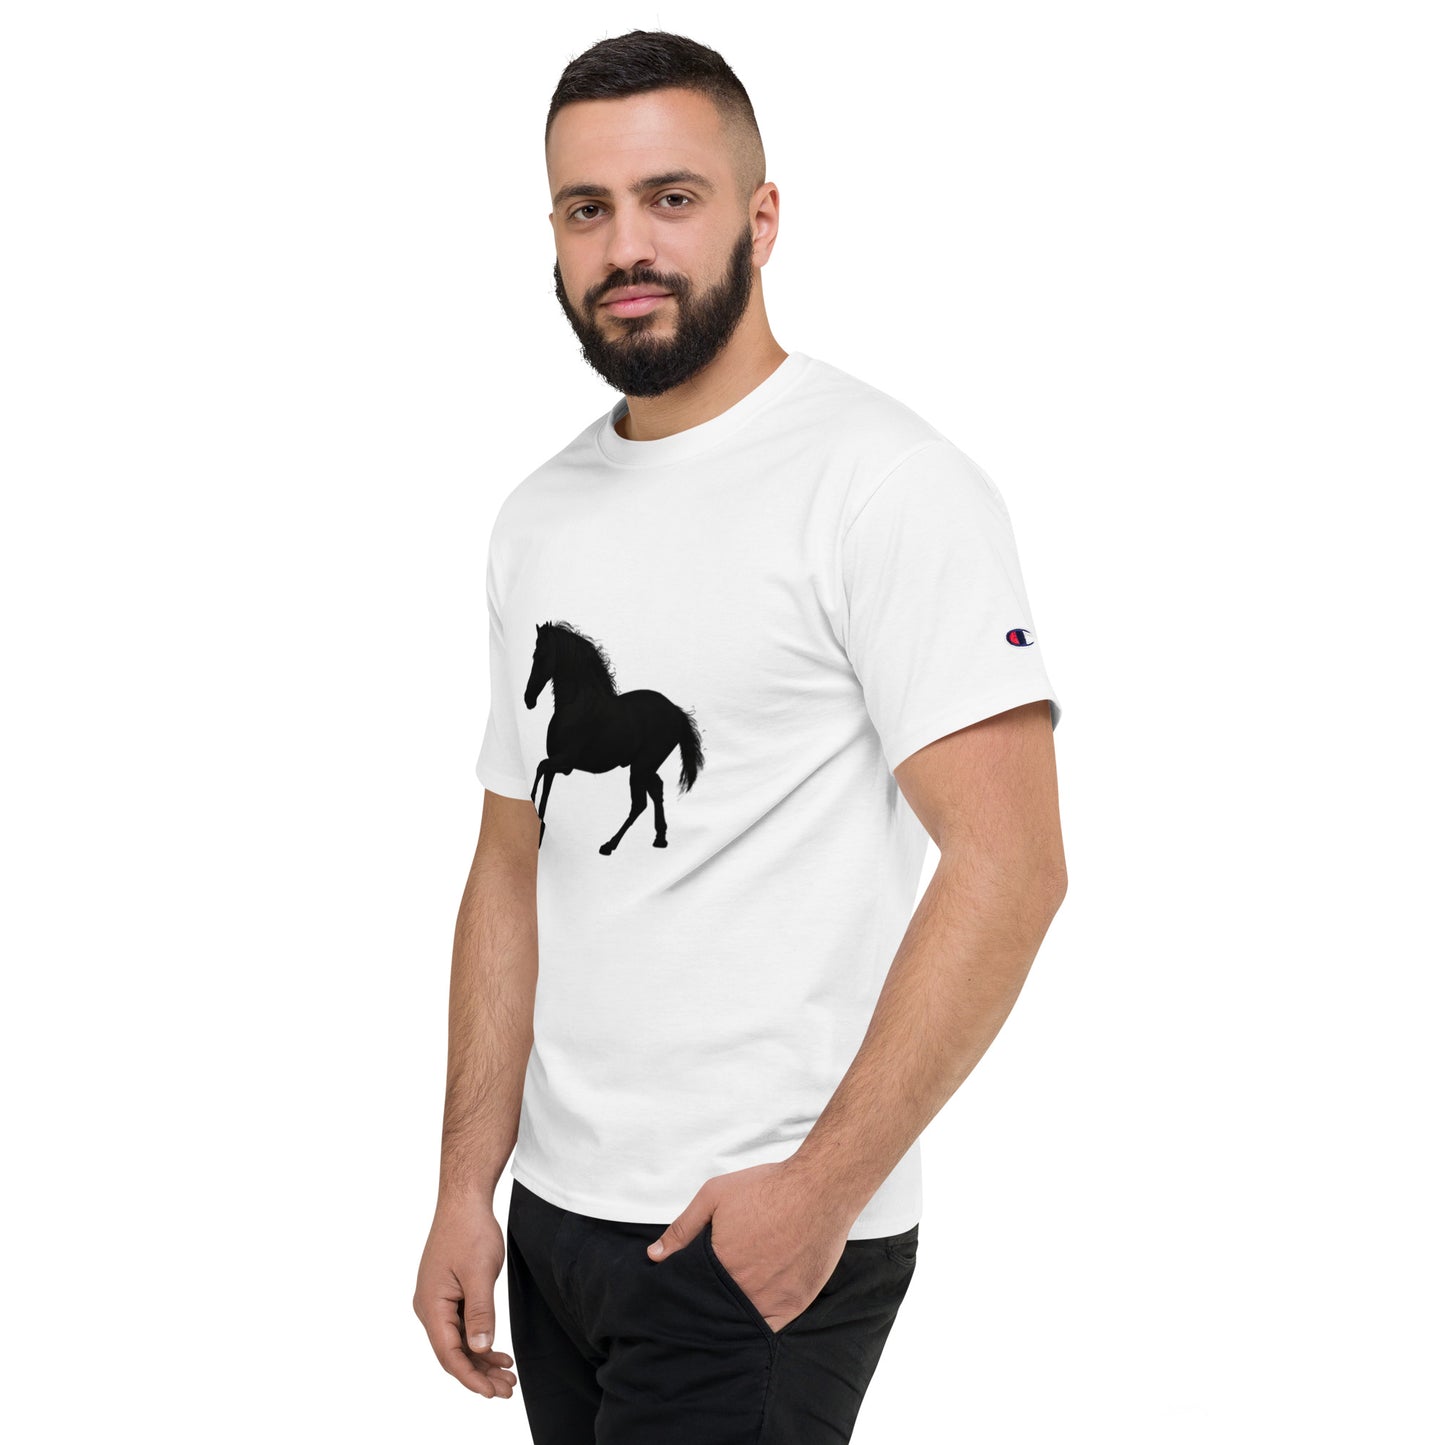 Horse Champion T-Shirt